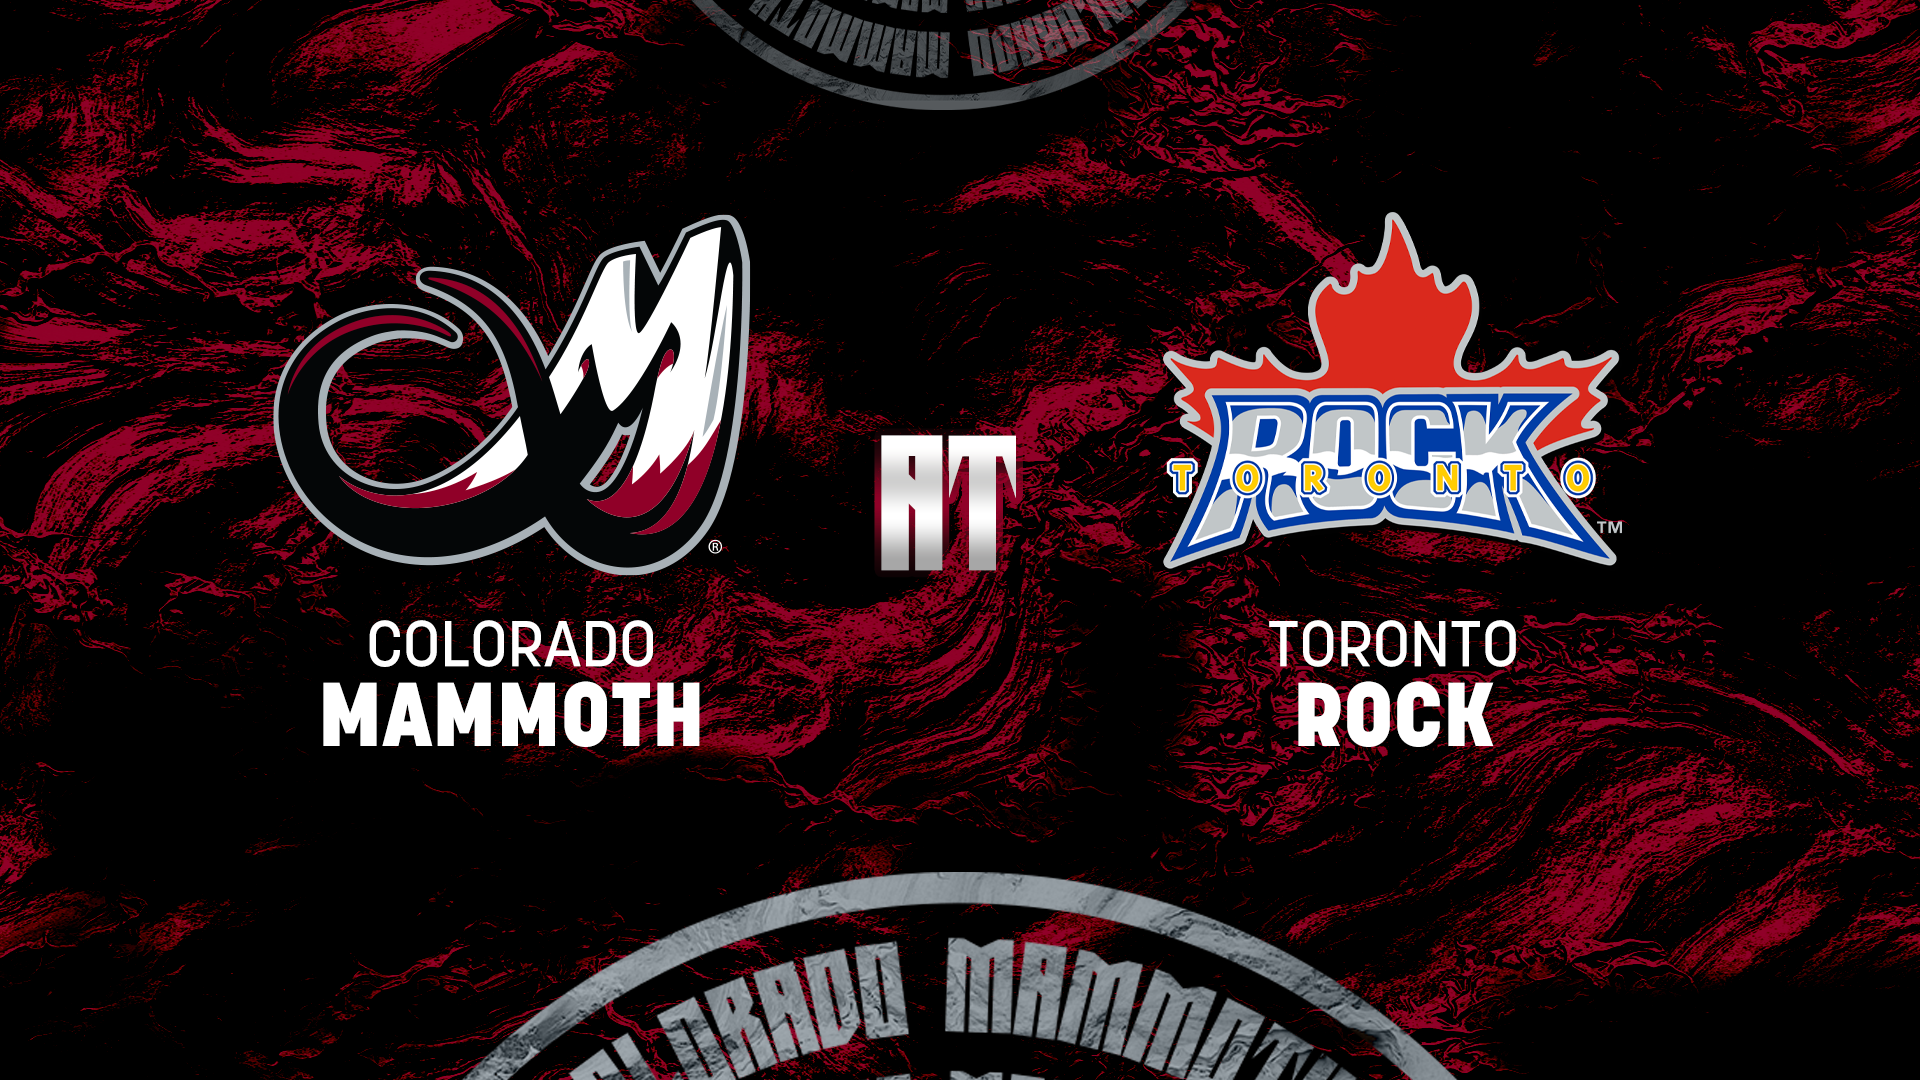 Mammoth vs. Rock matchup graphic